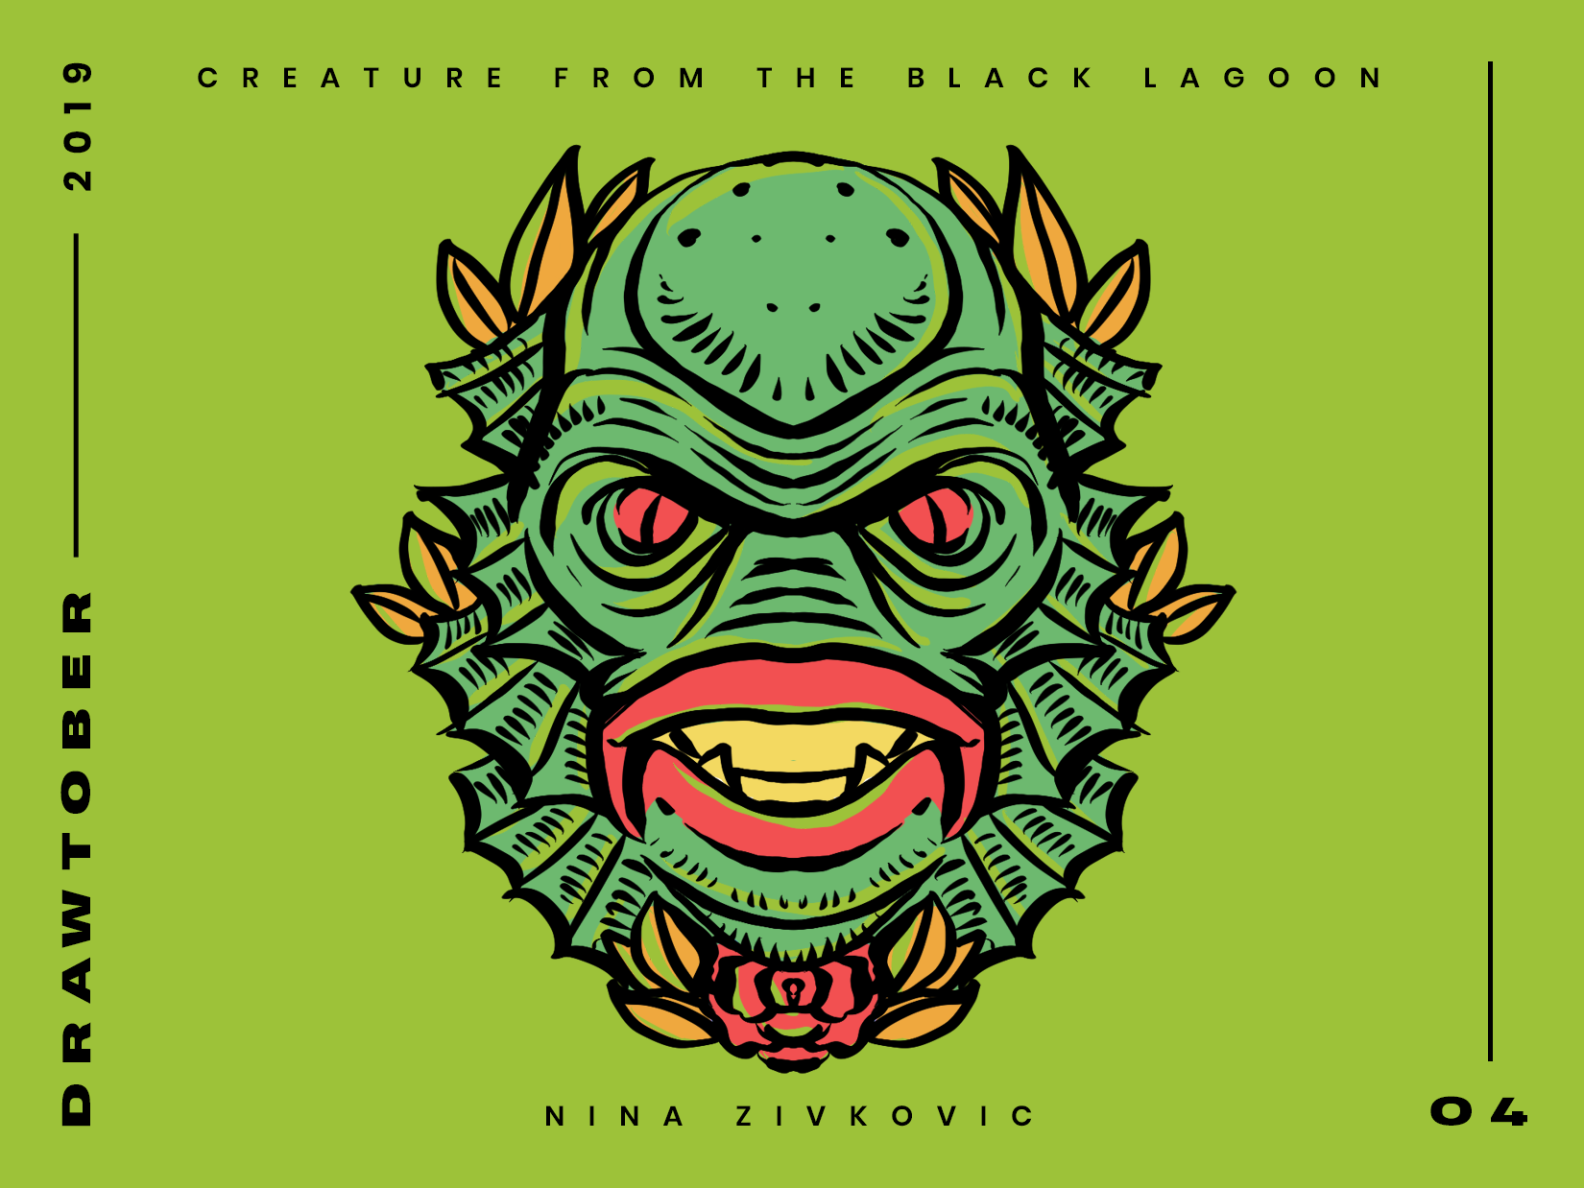 Drawtober: 04 of 31 - Creature of the Black Lagoon designed by Nina Zivkovi...